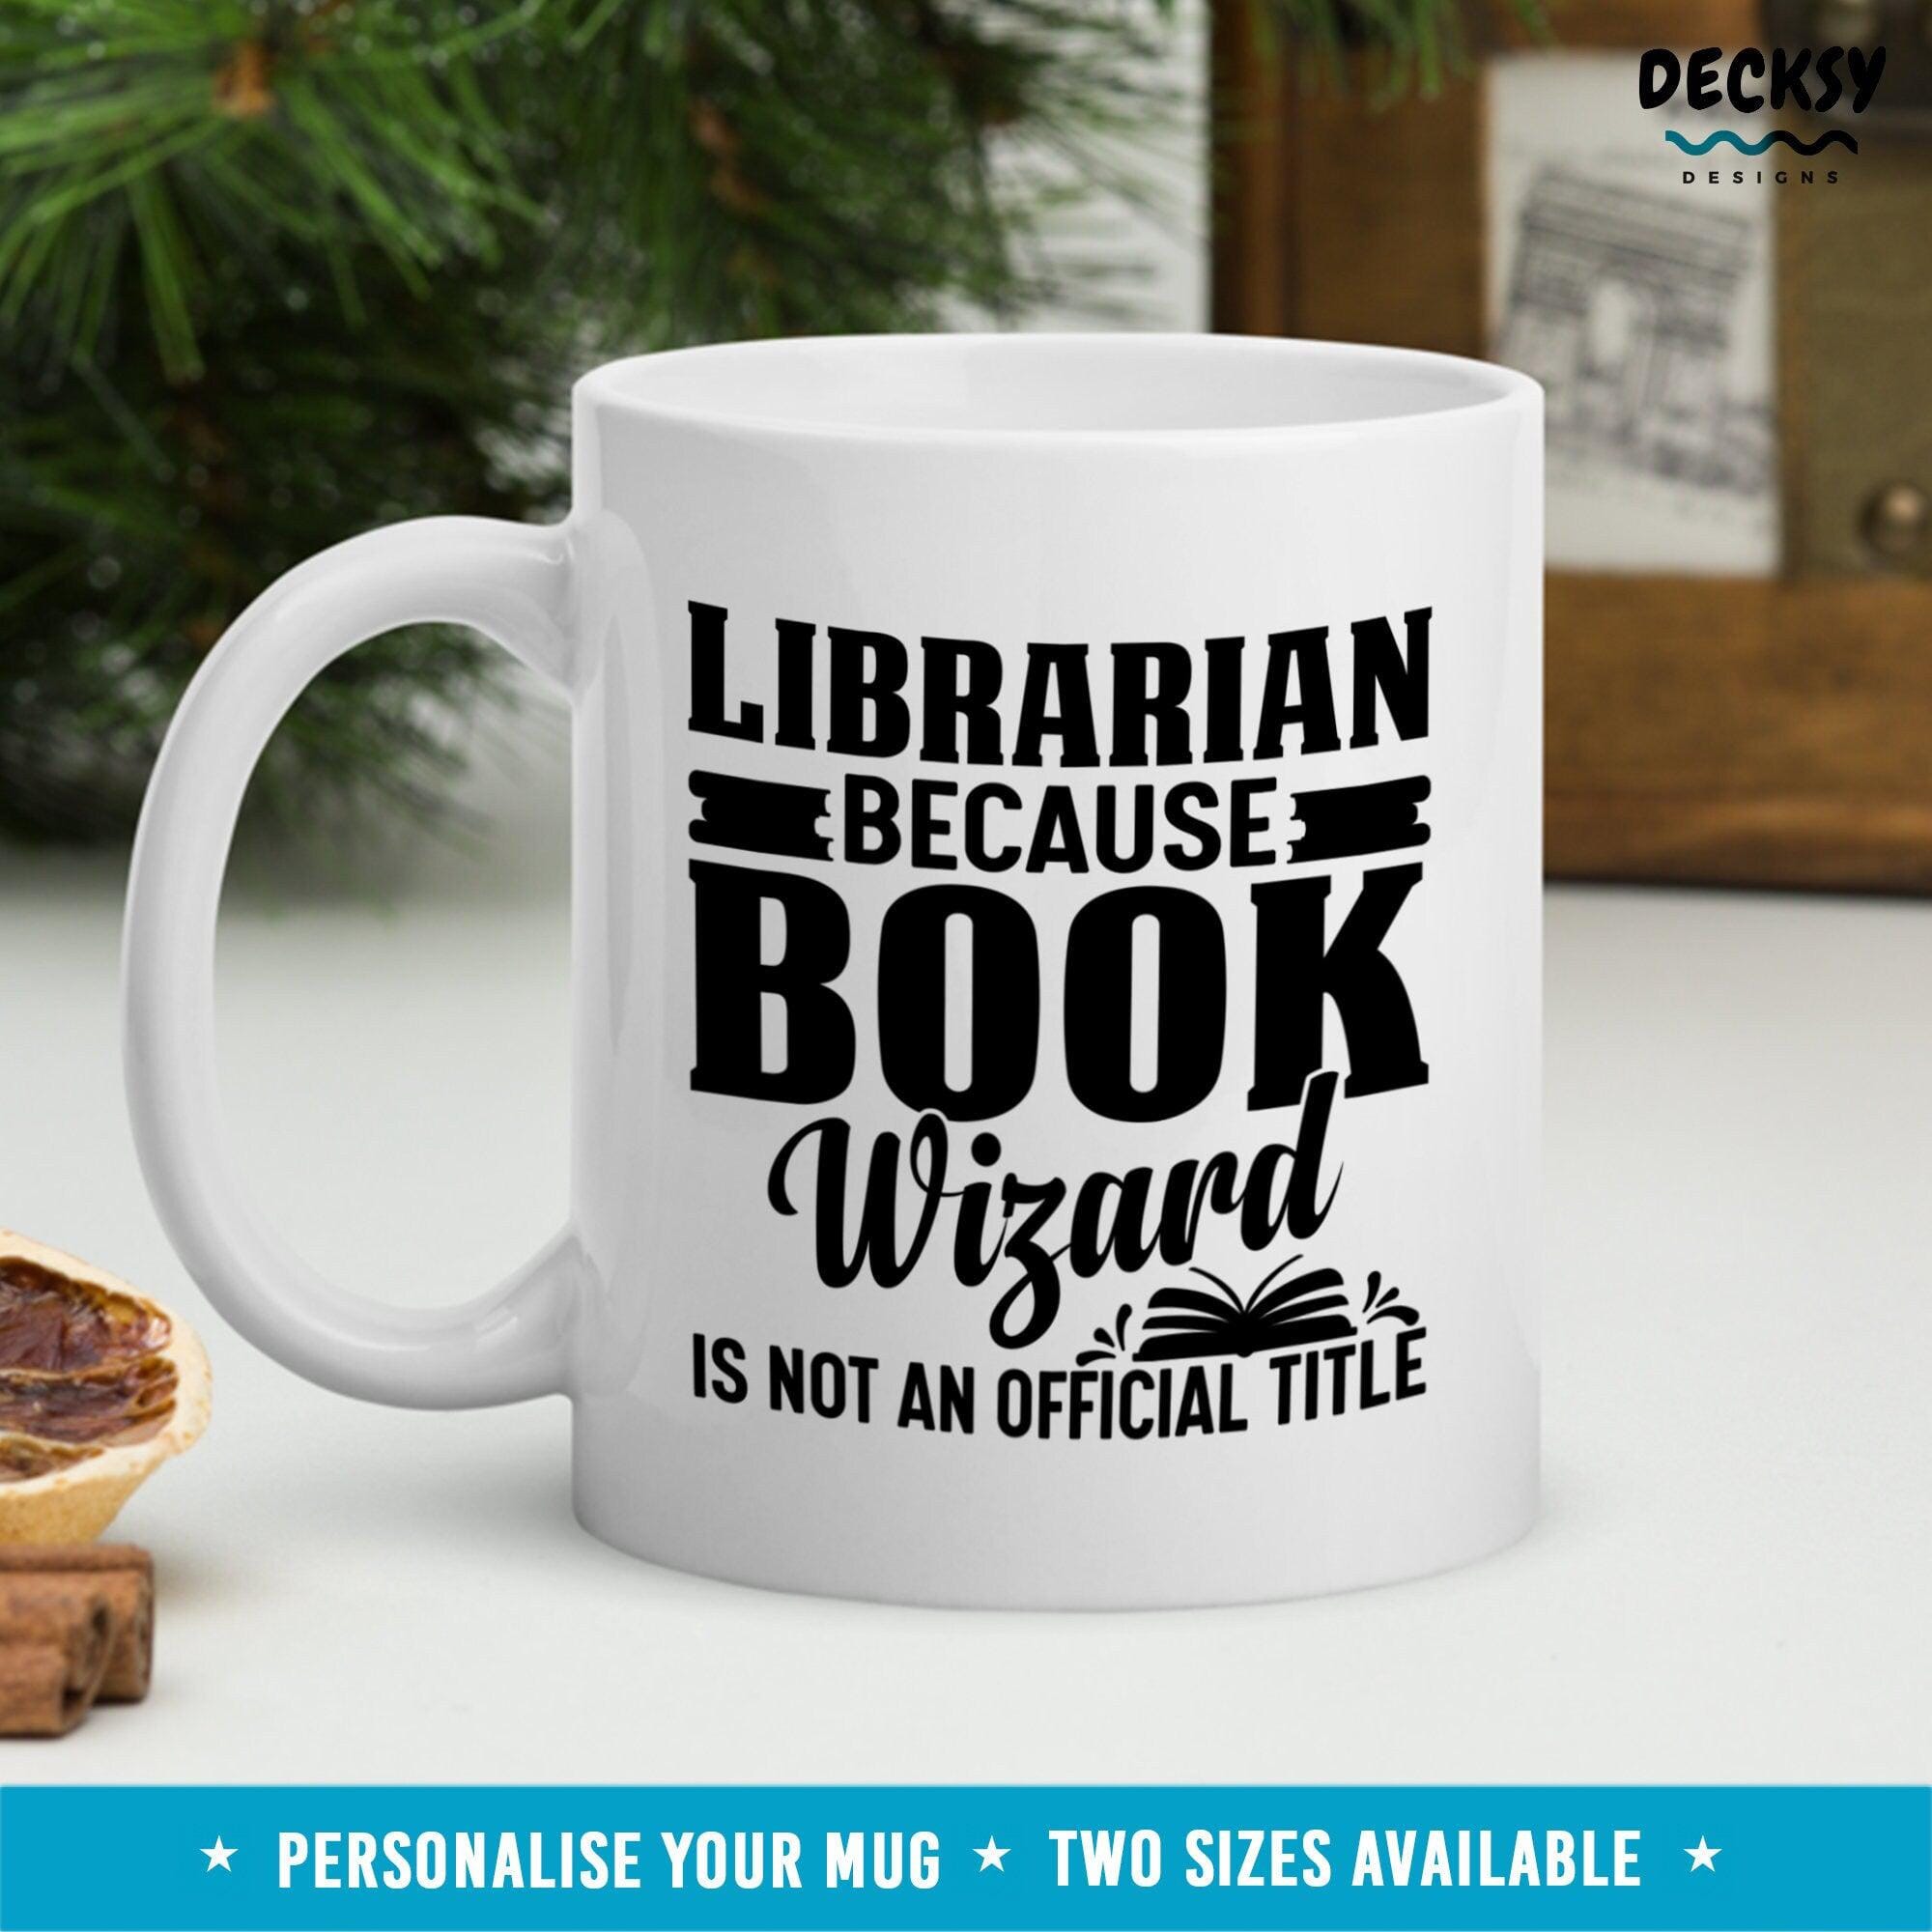 School Librarian Mug Gift, Custom Library Coffee Mug-Home & Living:Kitchen & Dining:Drink & Barware:Drinkware:Mugs-DecksyDesigns-11 Oz-NO PERSONALISATION-DecksyDesigns